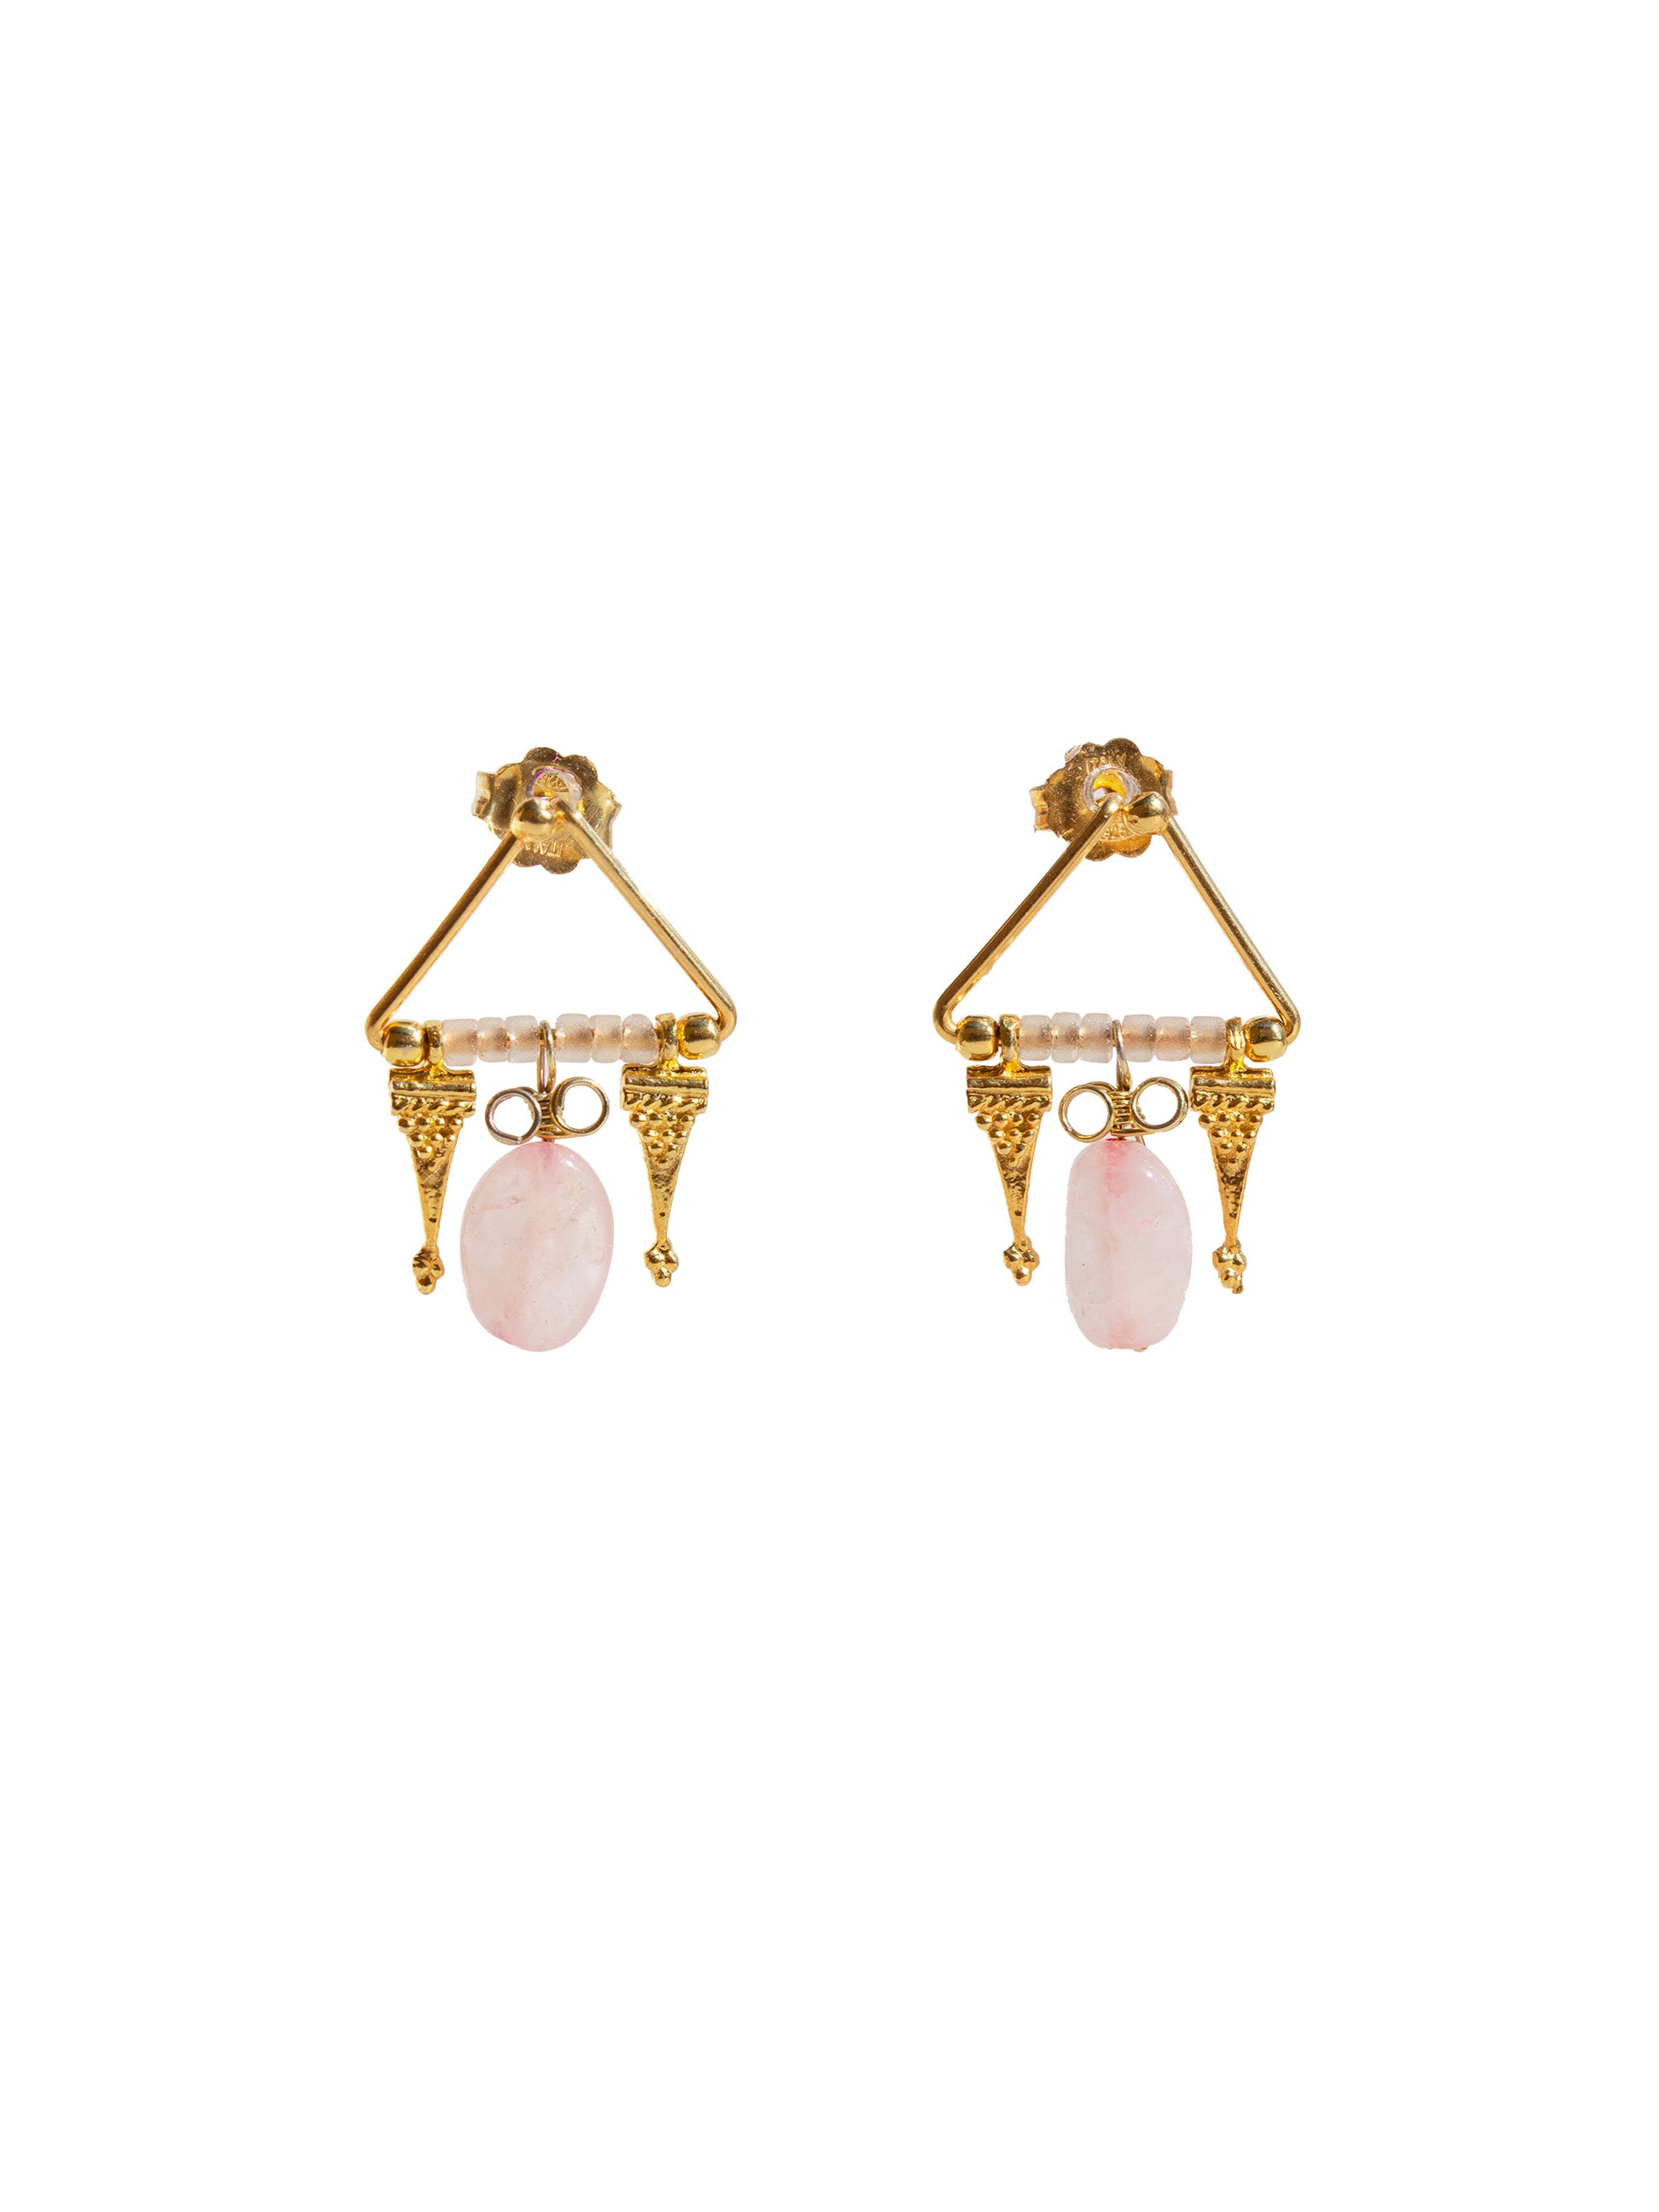 Mythological bohemian earrings with pink quartz